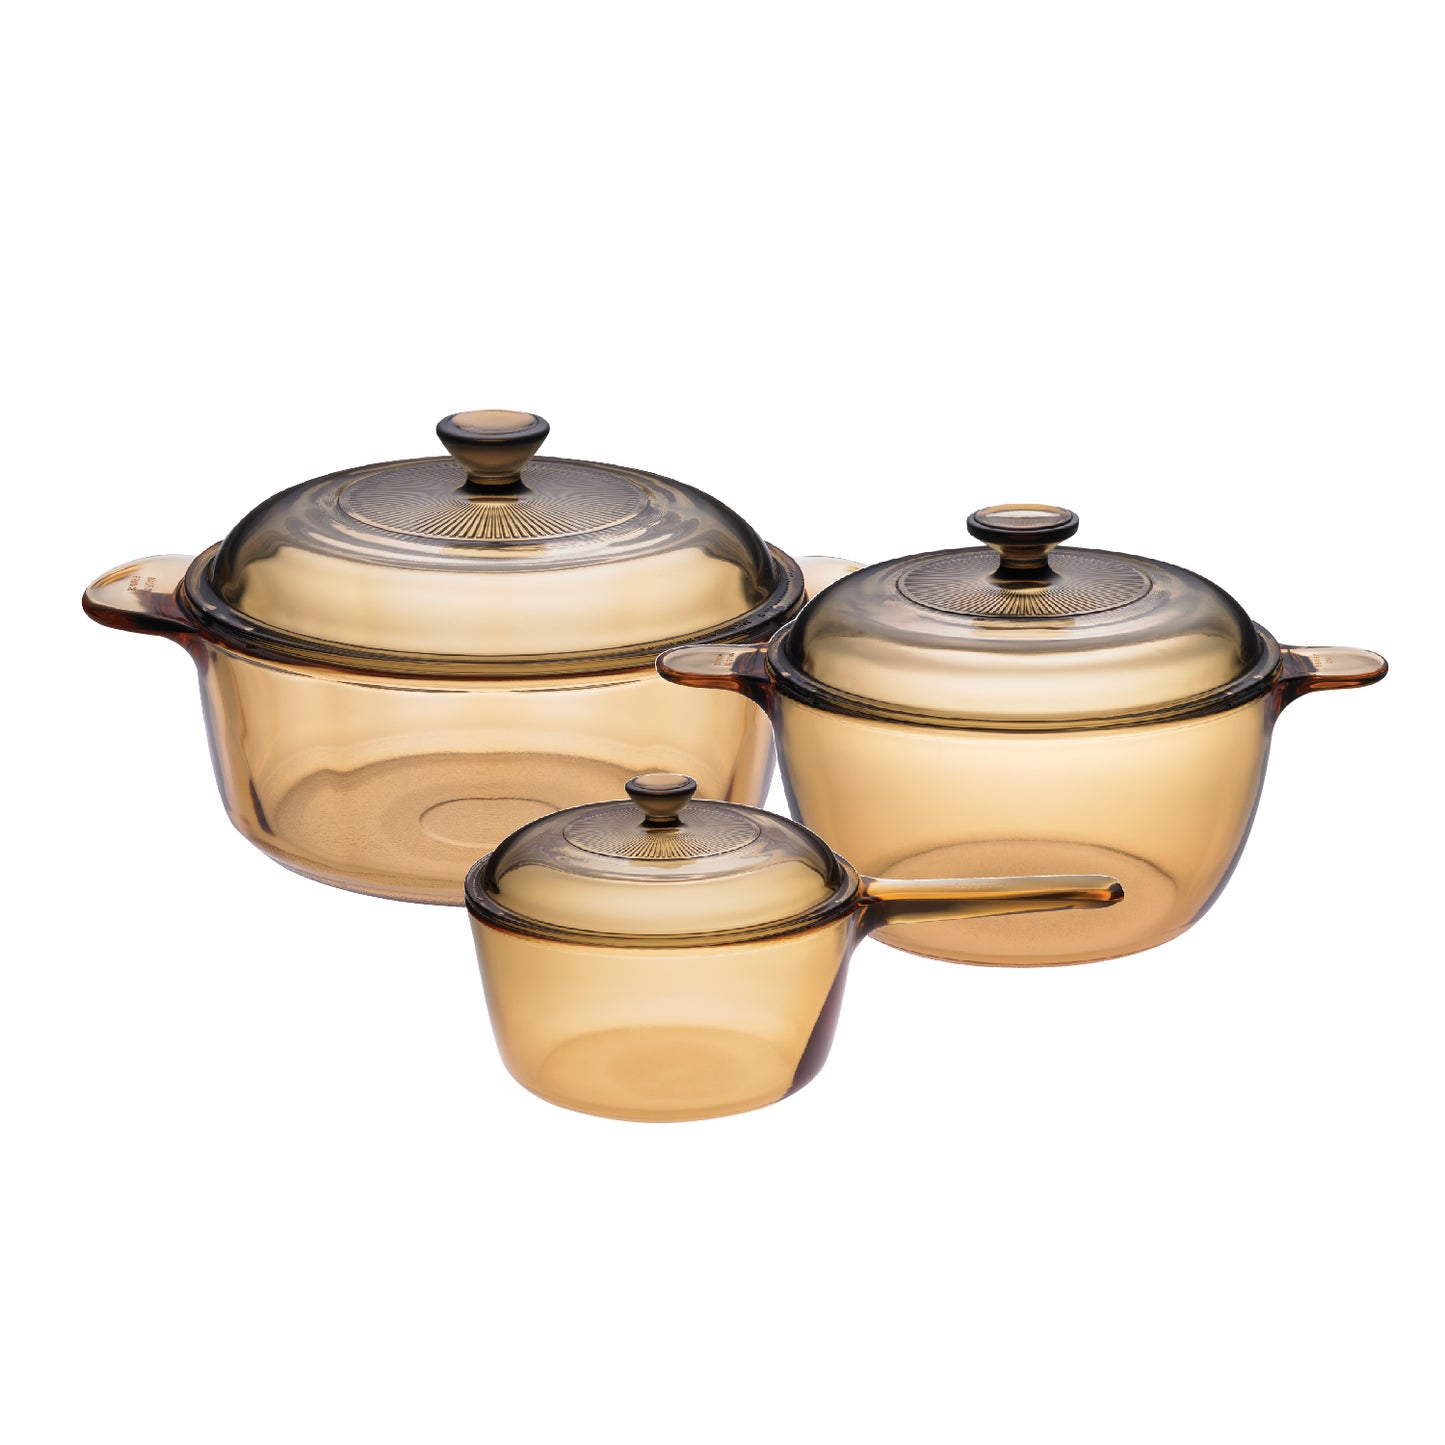 Visions Covered Cookware 6pc Set - 1L Saucepan, 1.25L Versa Pot, 2.5L Cookpot